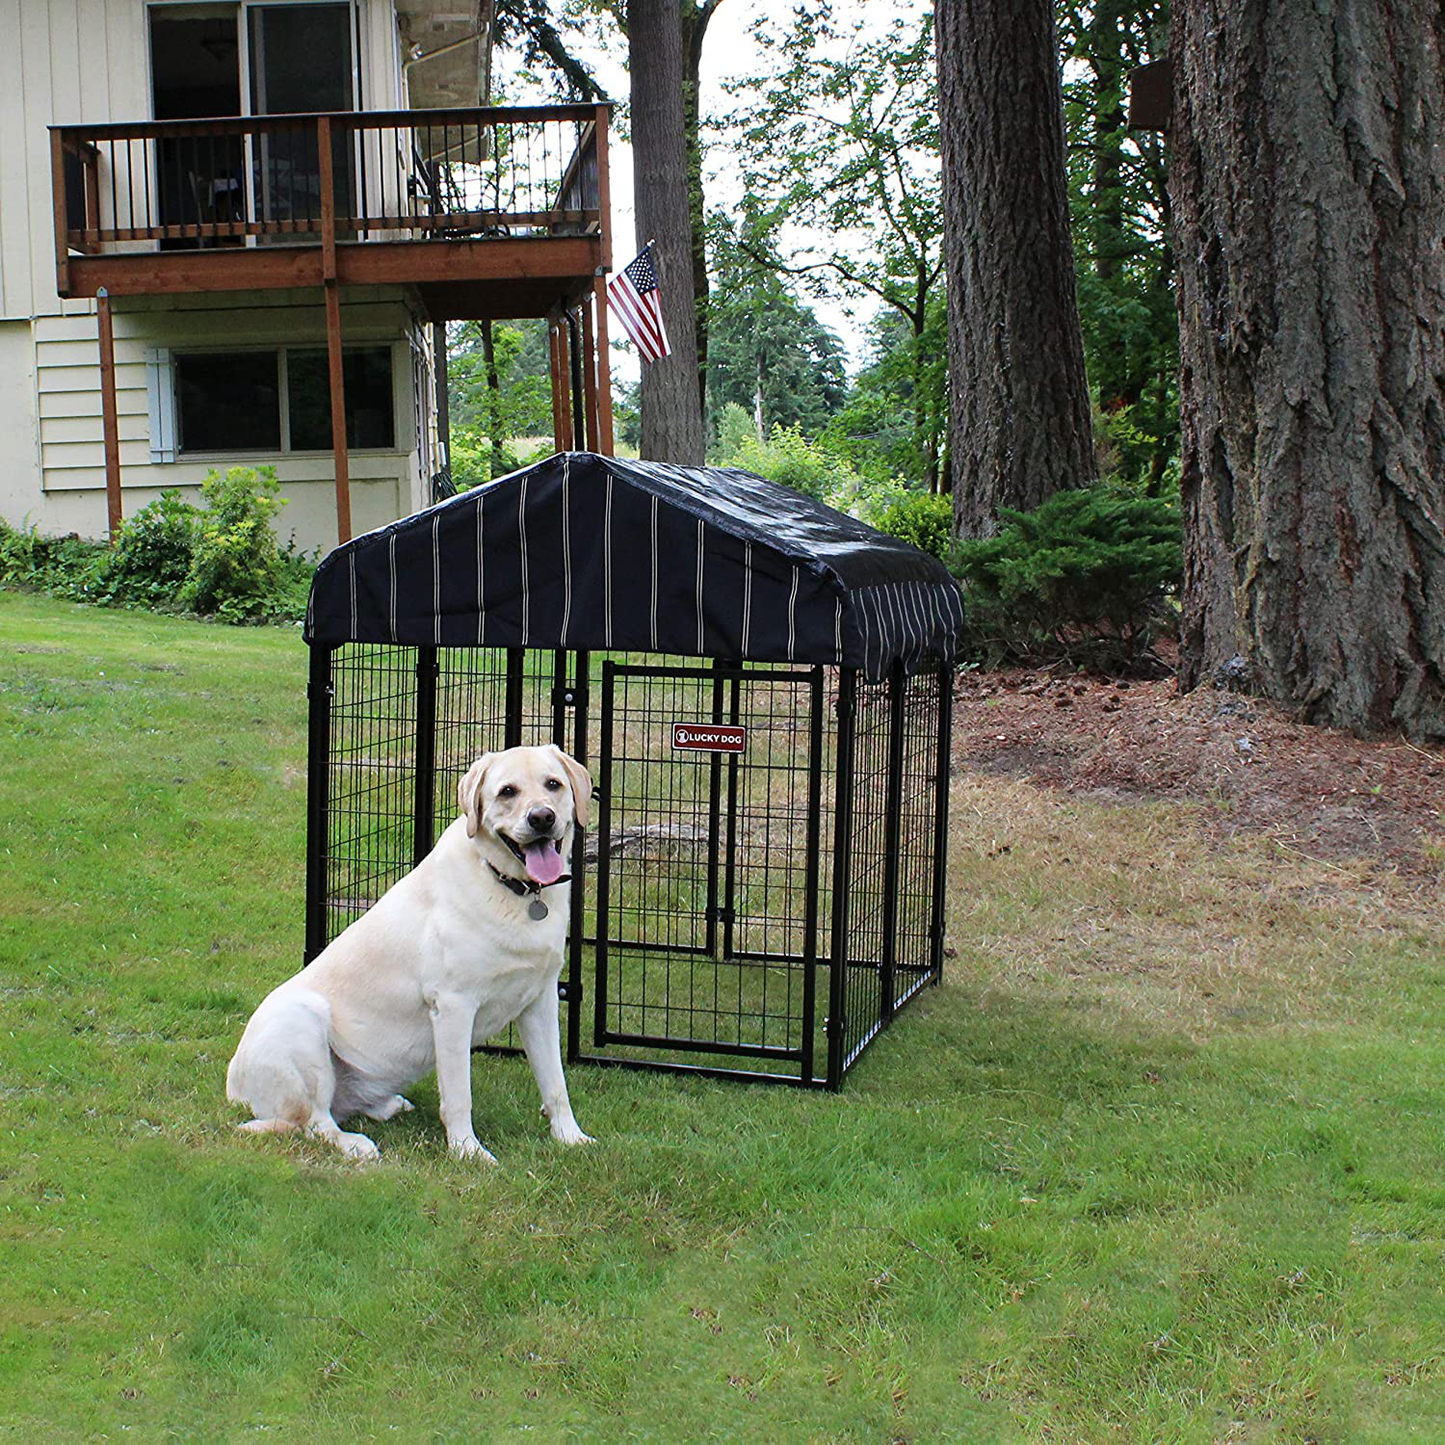 Lucky Dog Pet Resort Kennel 48 X 48 X 52 in Outdoor Pet Pen W/ High Density Waterproof Polyester Roof Cover & Dual Access Door Gate, Gray